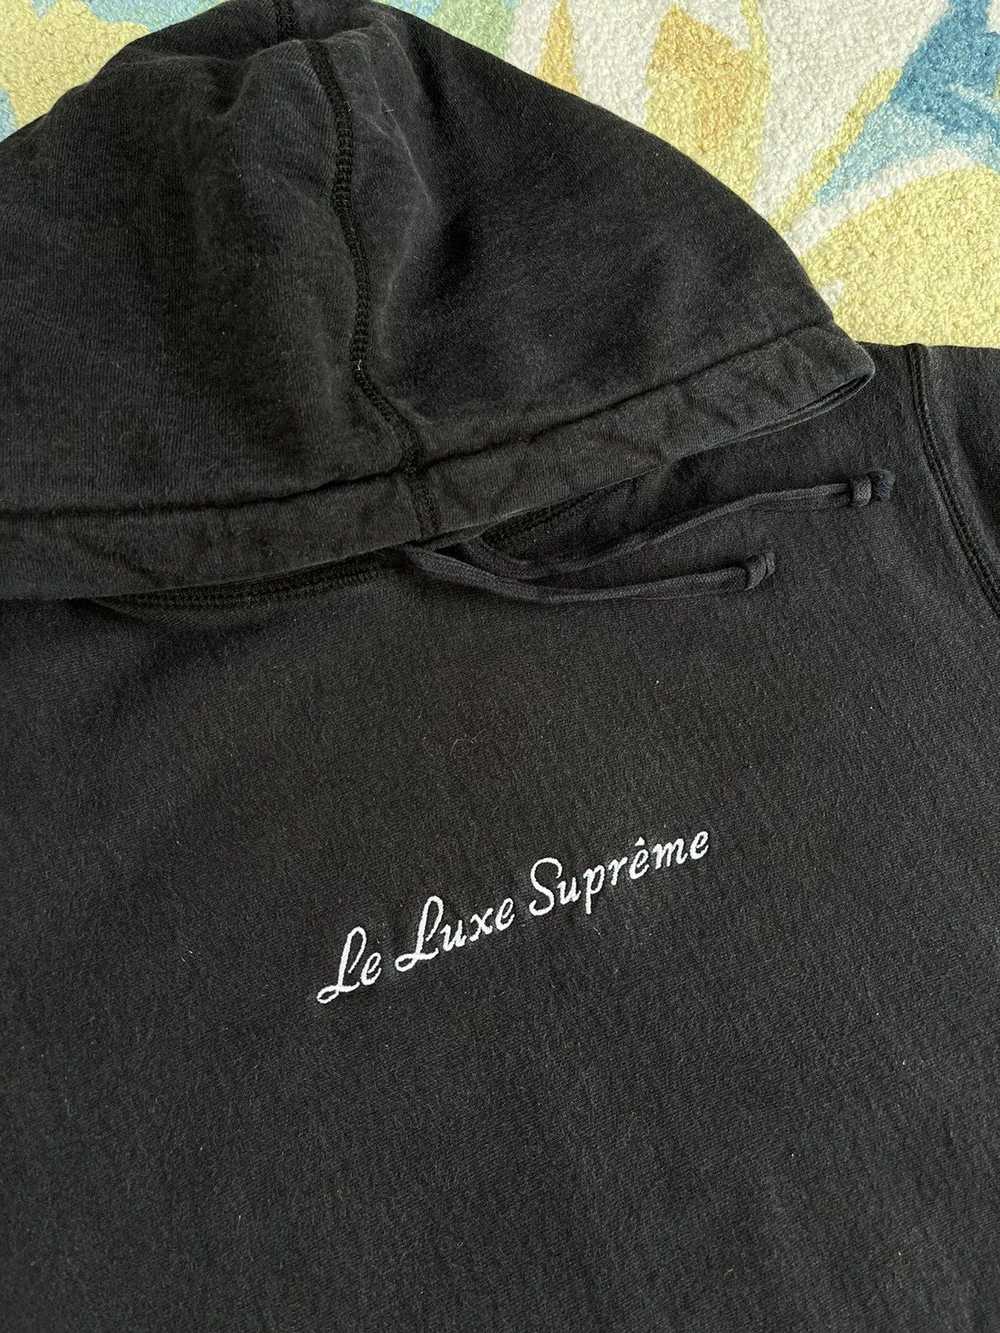 Supreme Supreme Le Luxe Hoodie SS19 Black - image 3